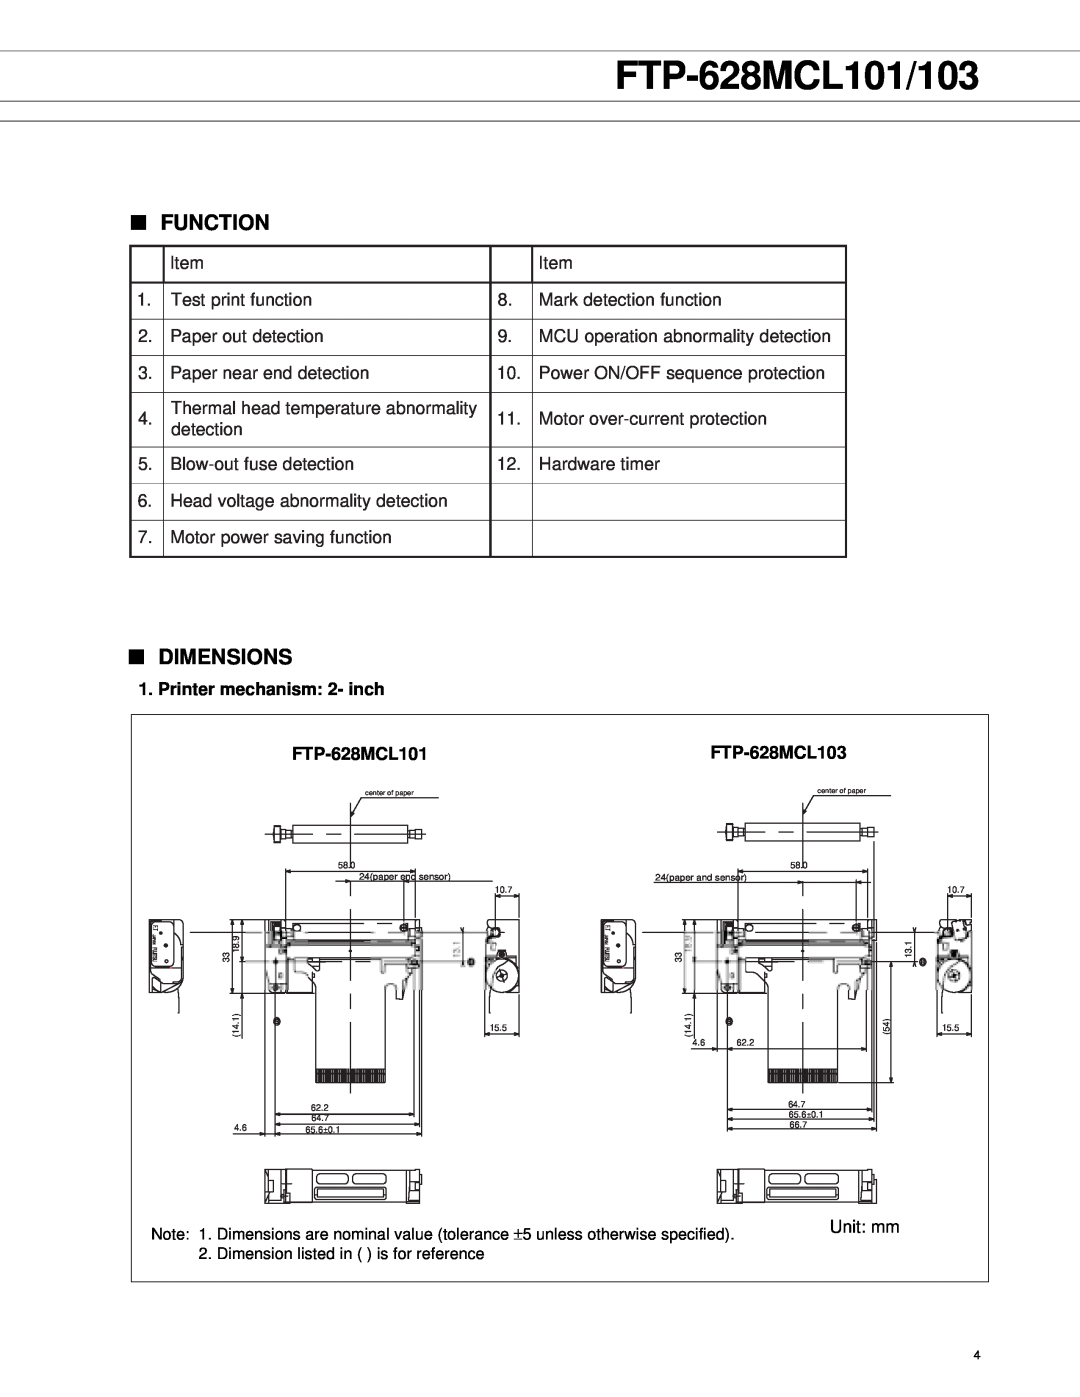 Fujitsu FTP-628MCL103 manual Function, Dimensions, Printer mechanism 2- inch, FTP-628MCL101/103 